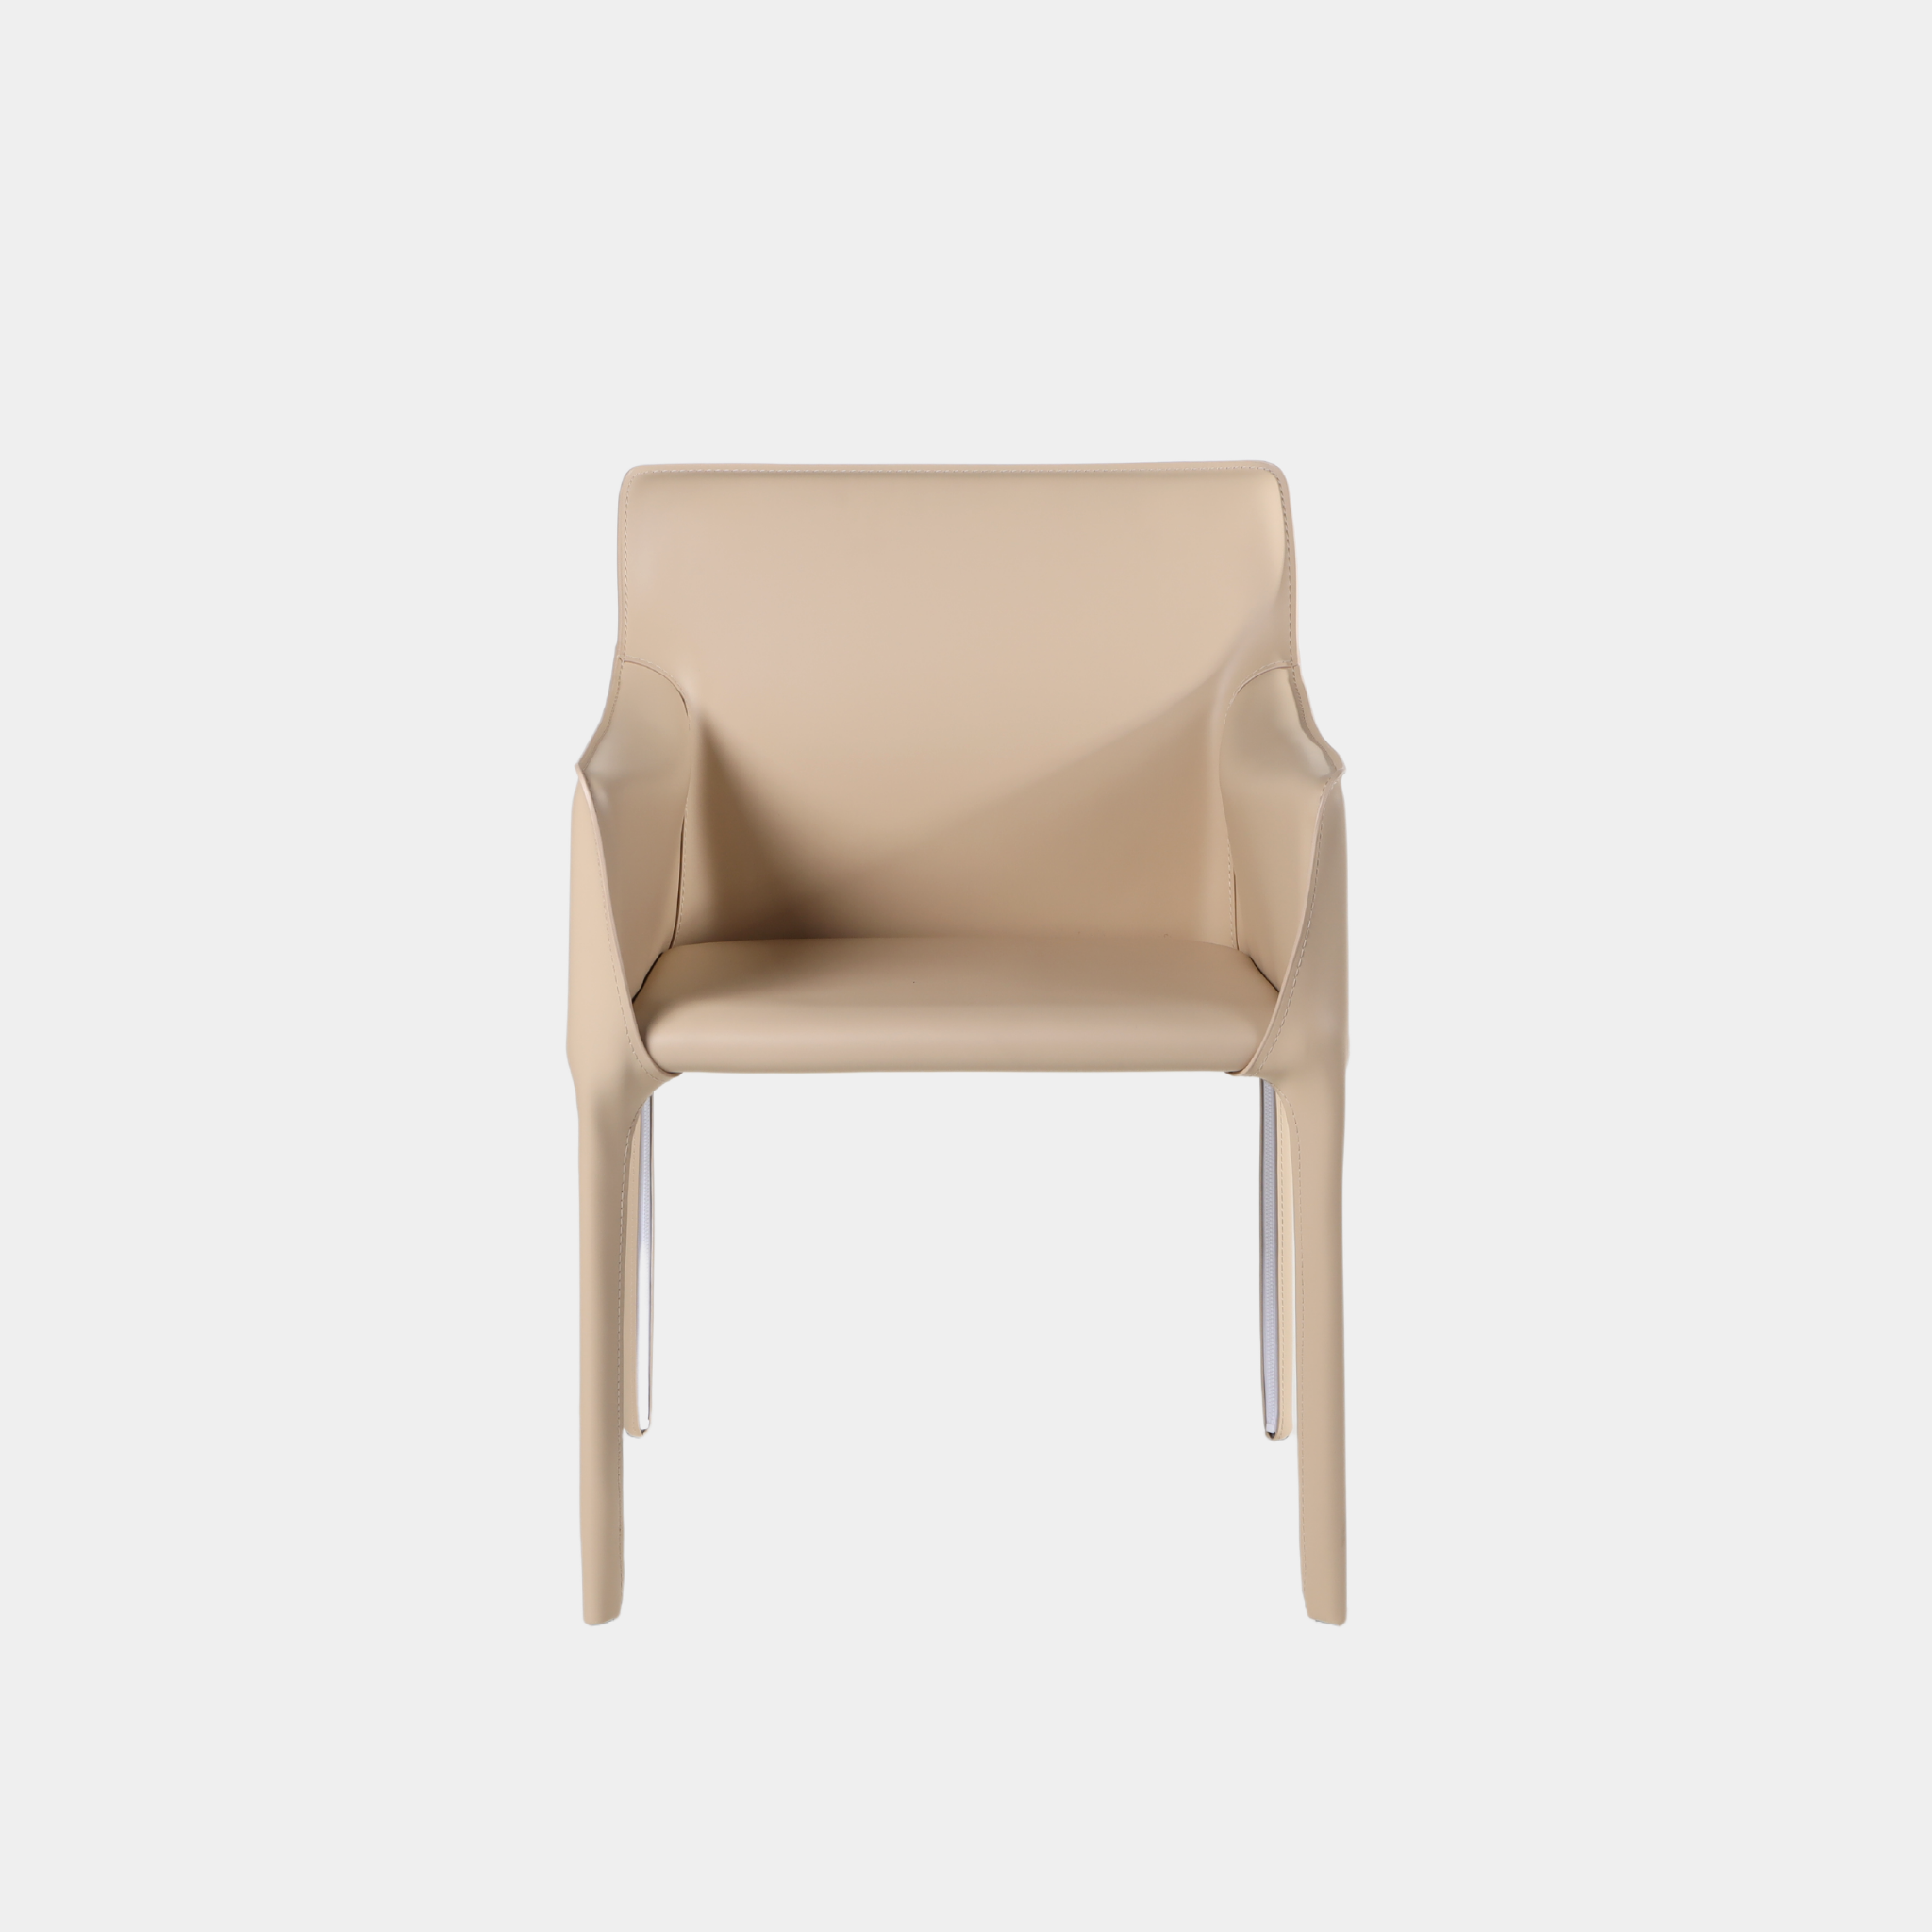 Cab 413 Dining Chair | Mario Bellini Replica - The Feelter